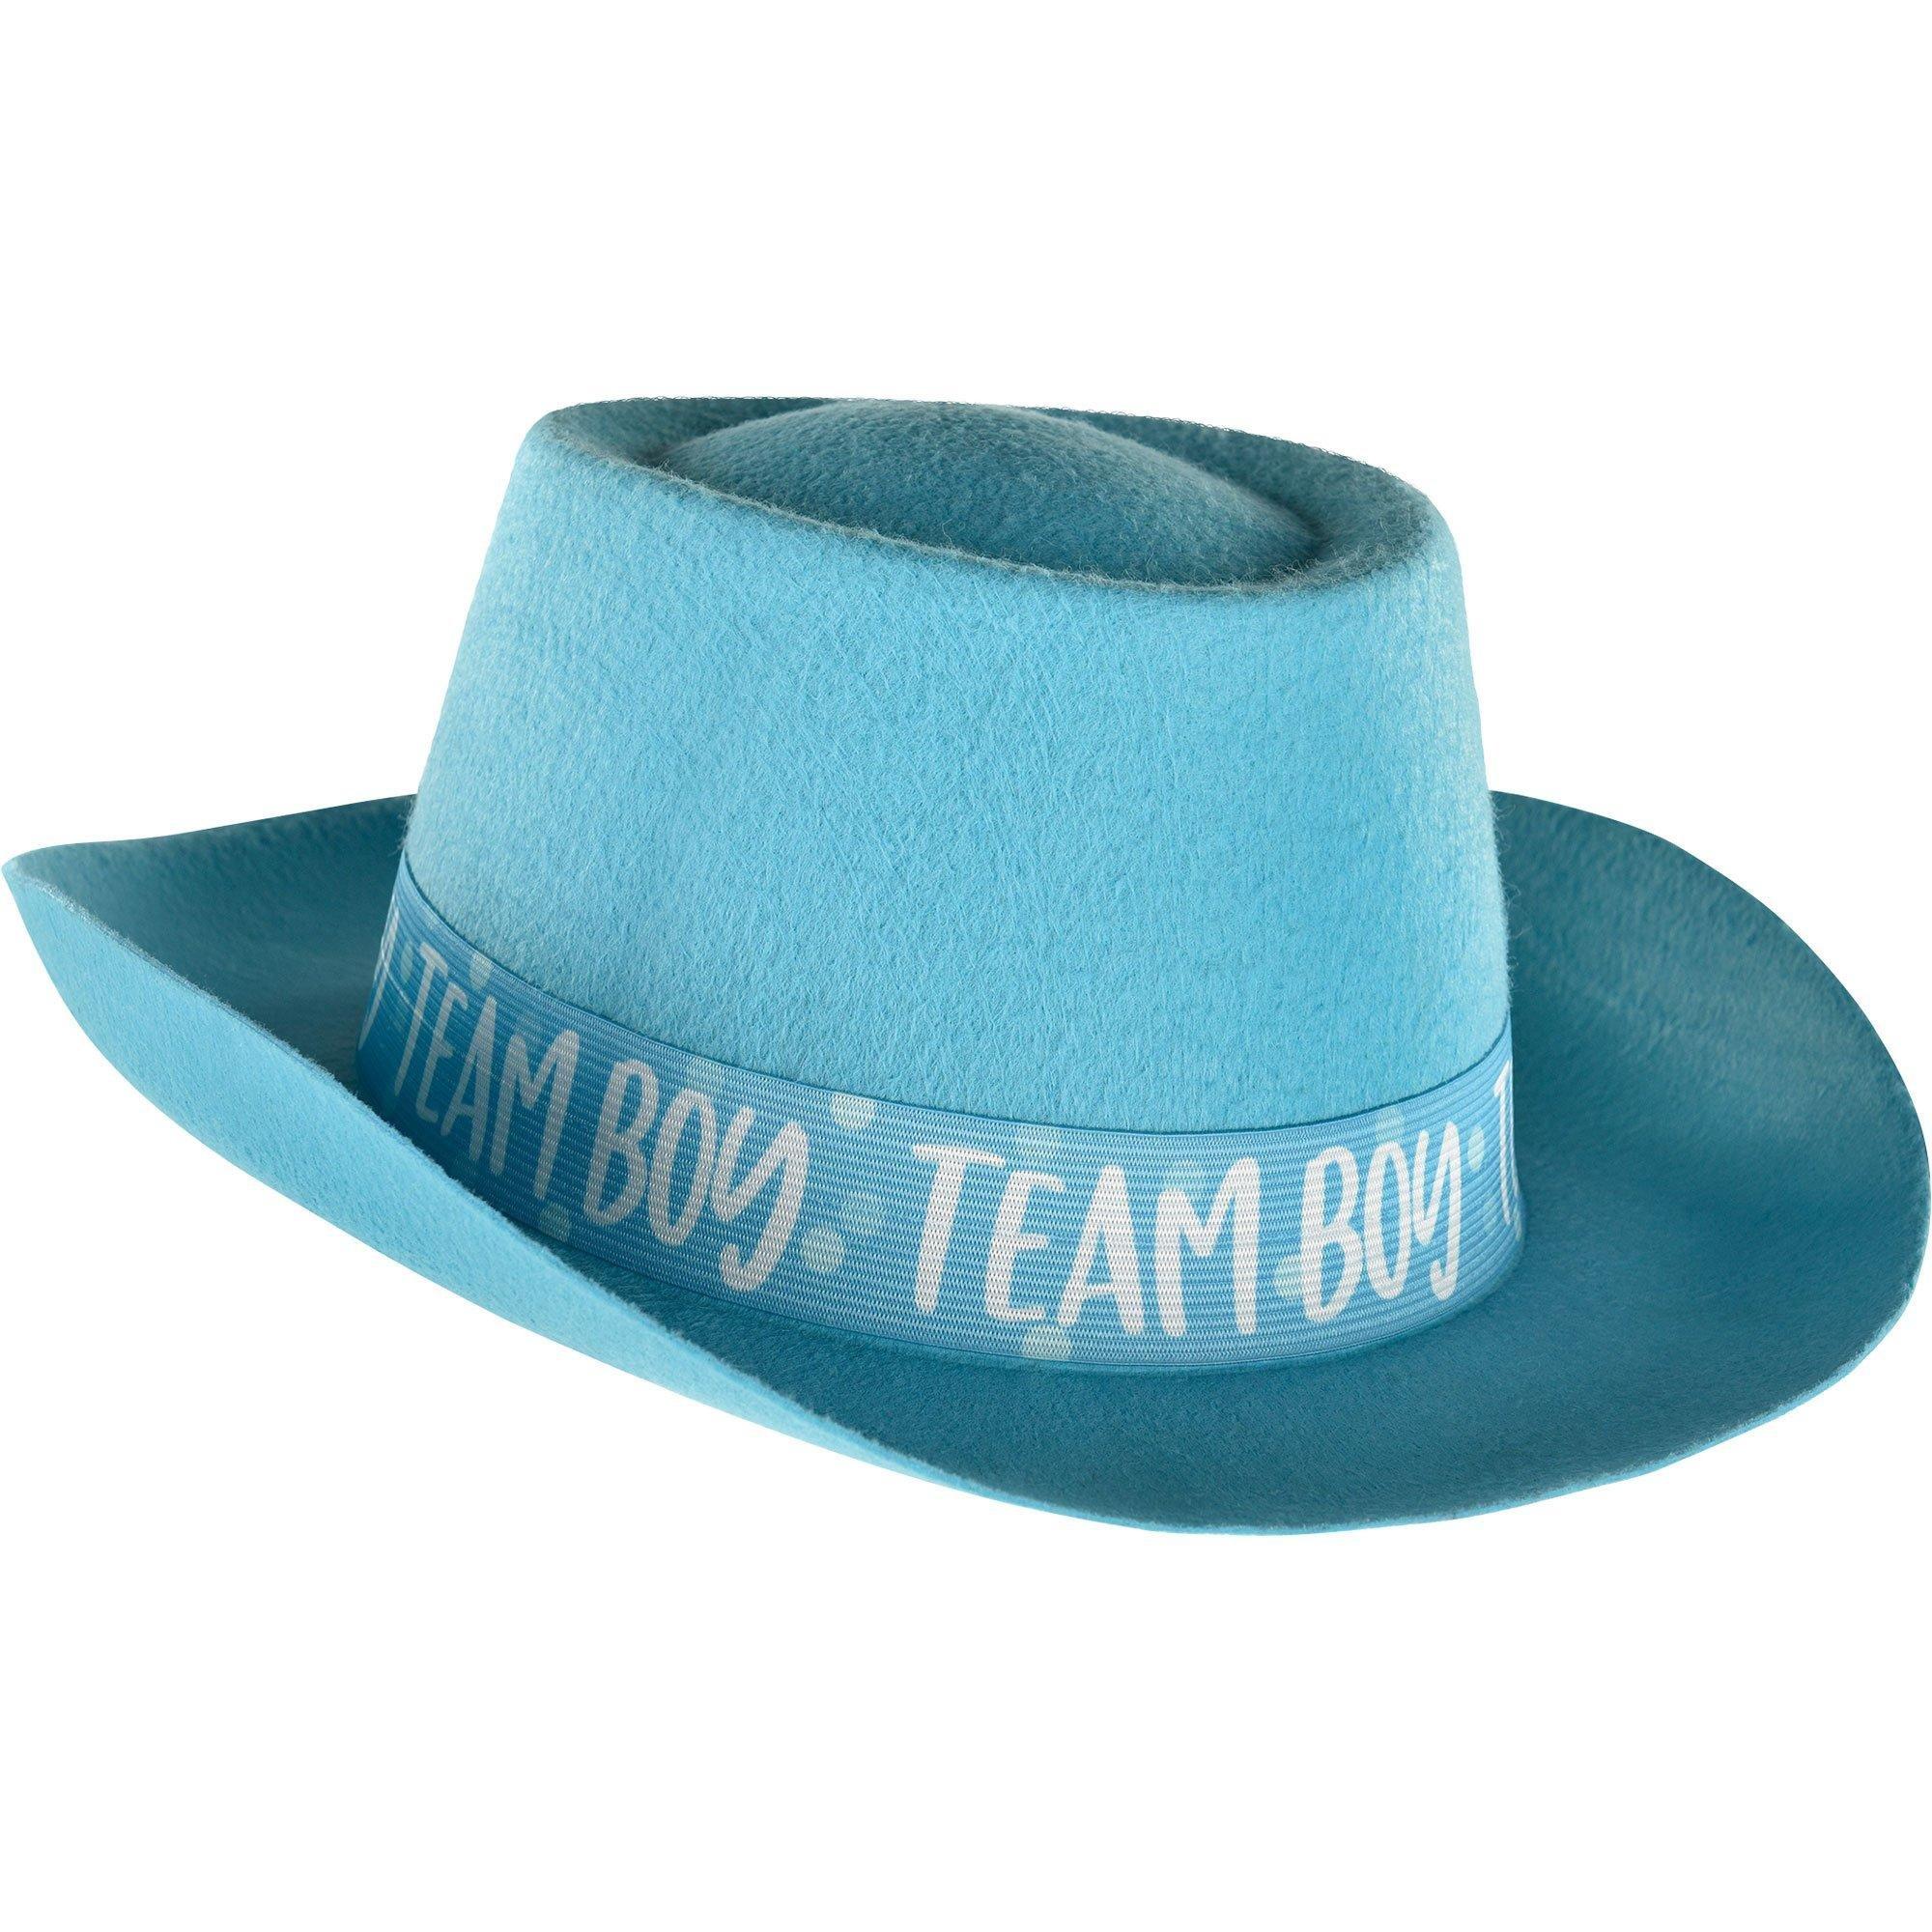 Team Gender Reveal Felt Cowboy Hat - The Big Reveal